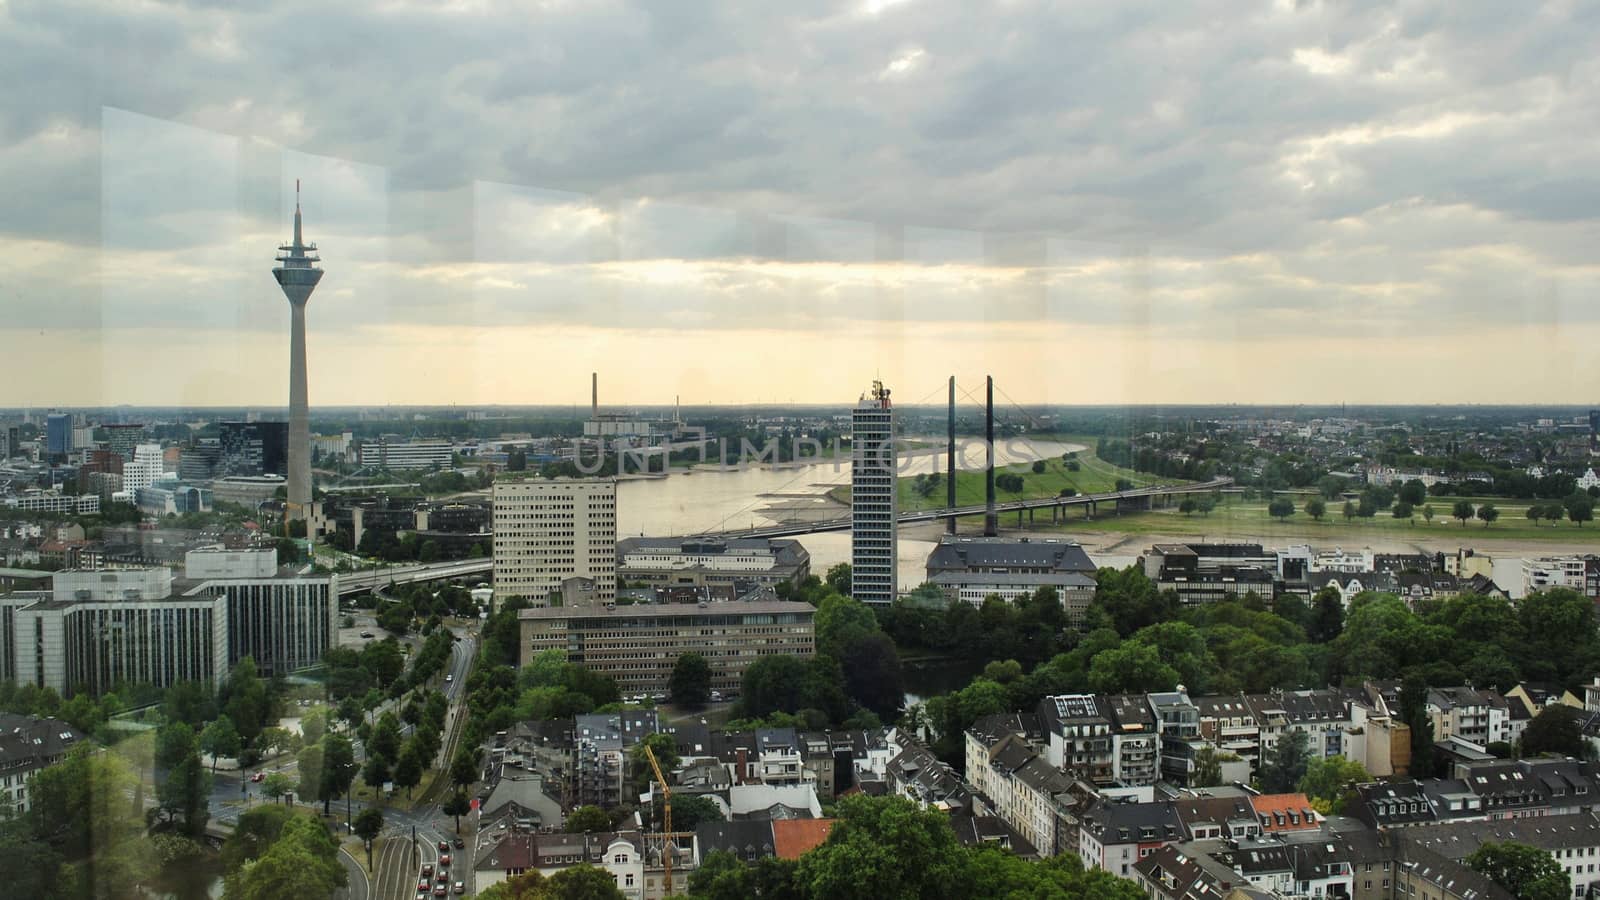 Bridge over the Rhine River in Dusseldorf by DaVidich